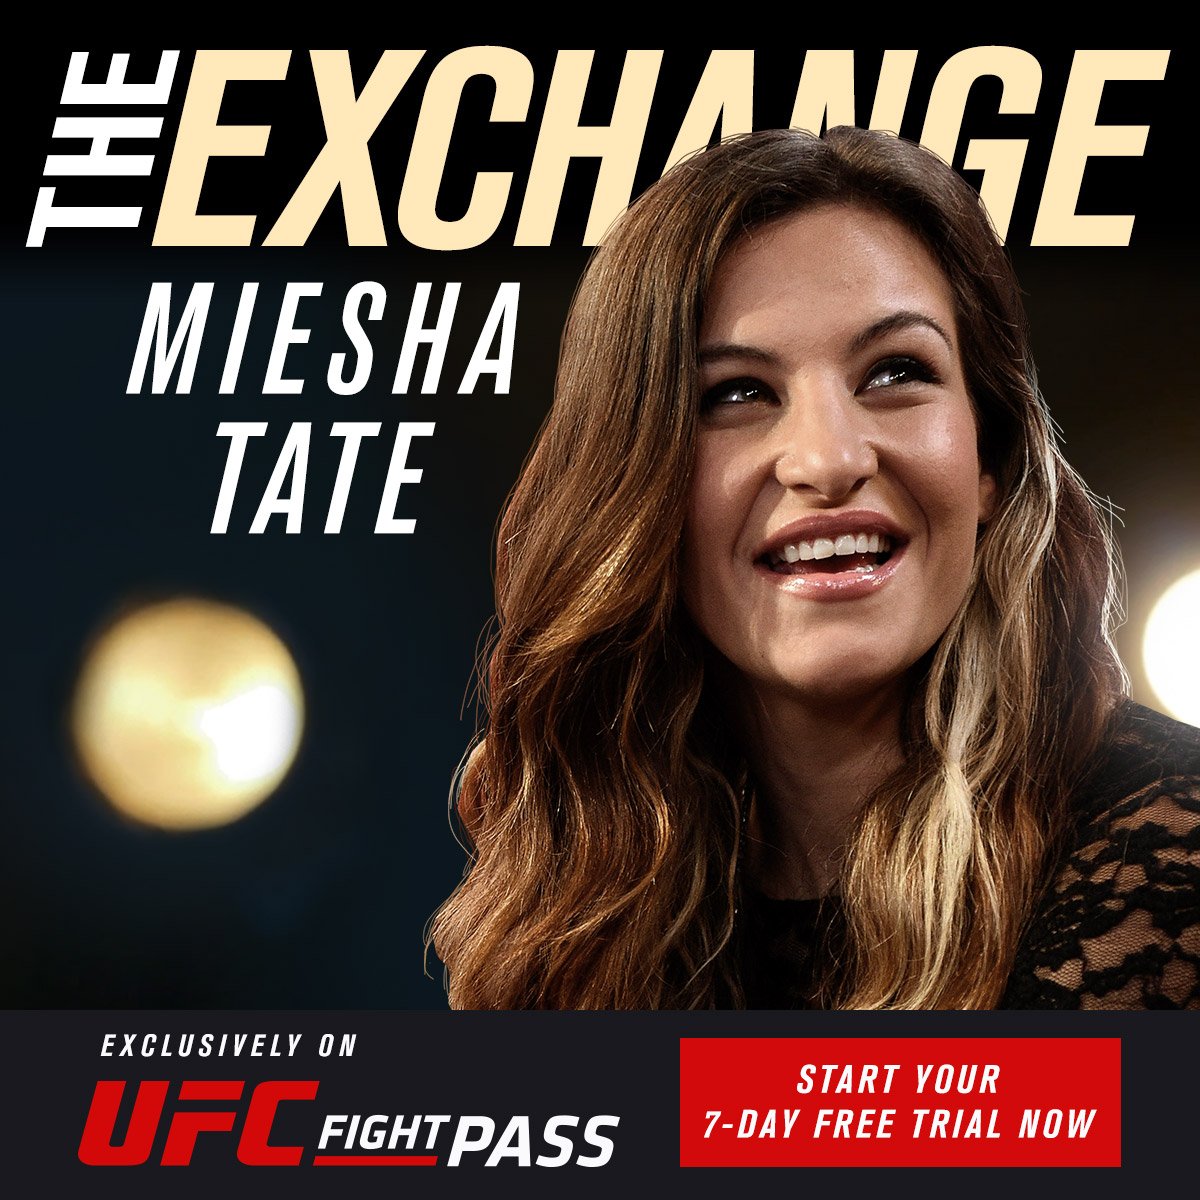 RT @UFCFightPass: .@MieshaTate warns @Amanda_Leoa “big jump, emotional & mental” to title class. #TheExchange https://t.co/bKoObTqlEK https…